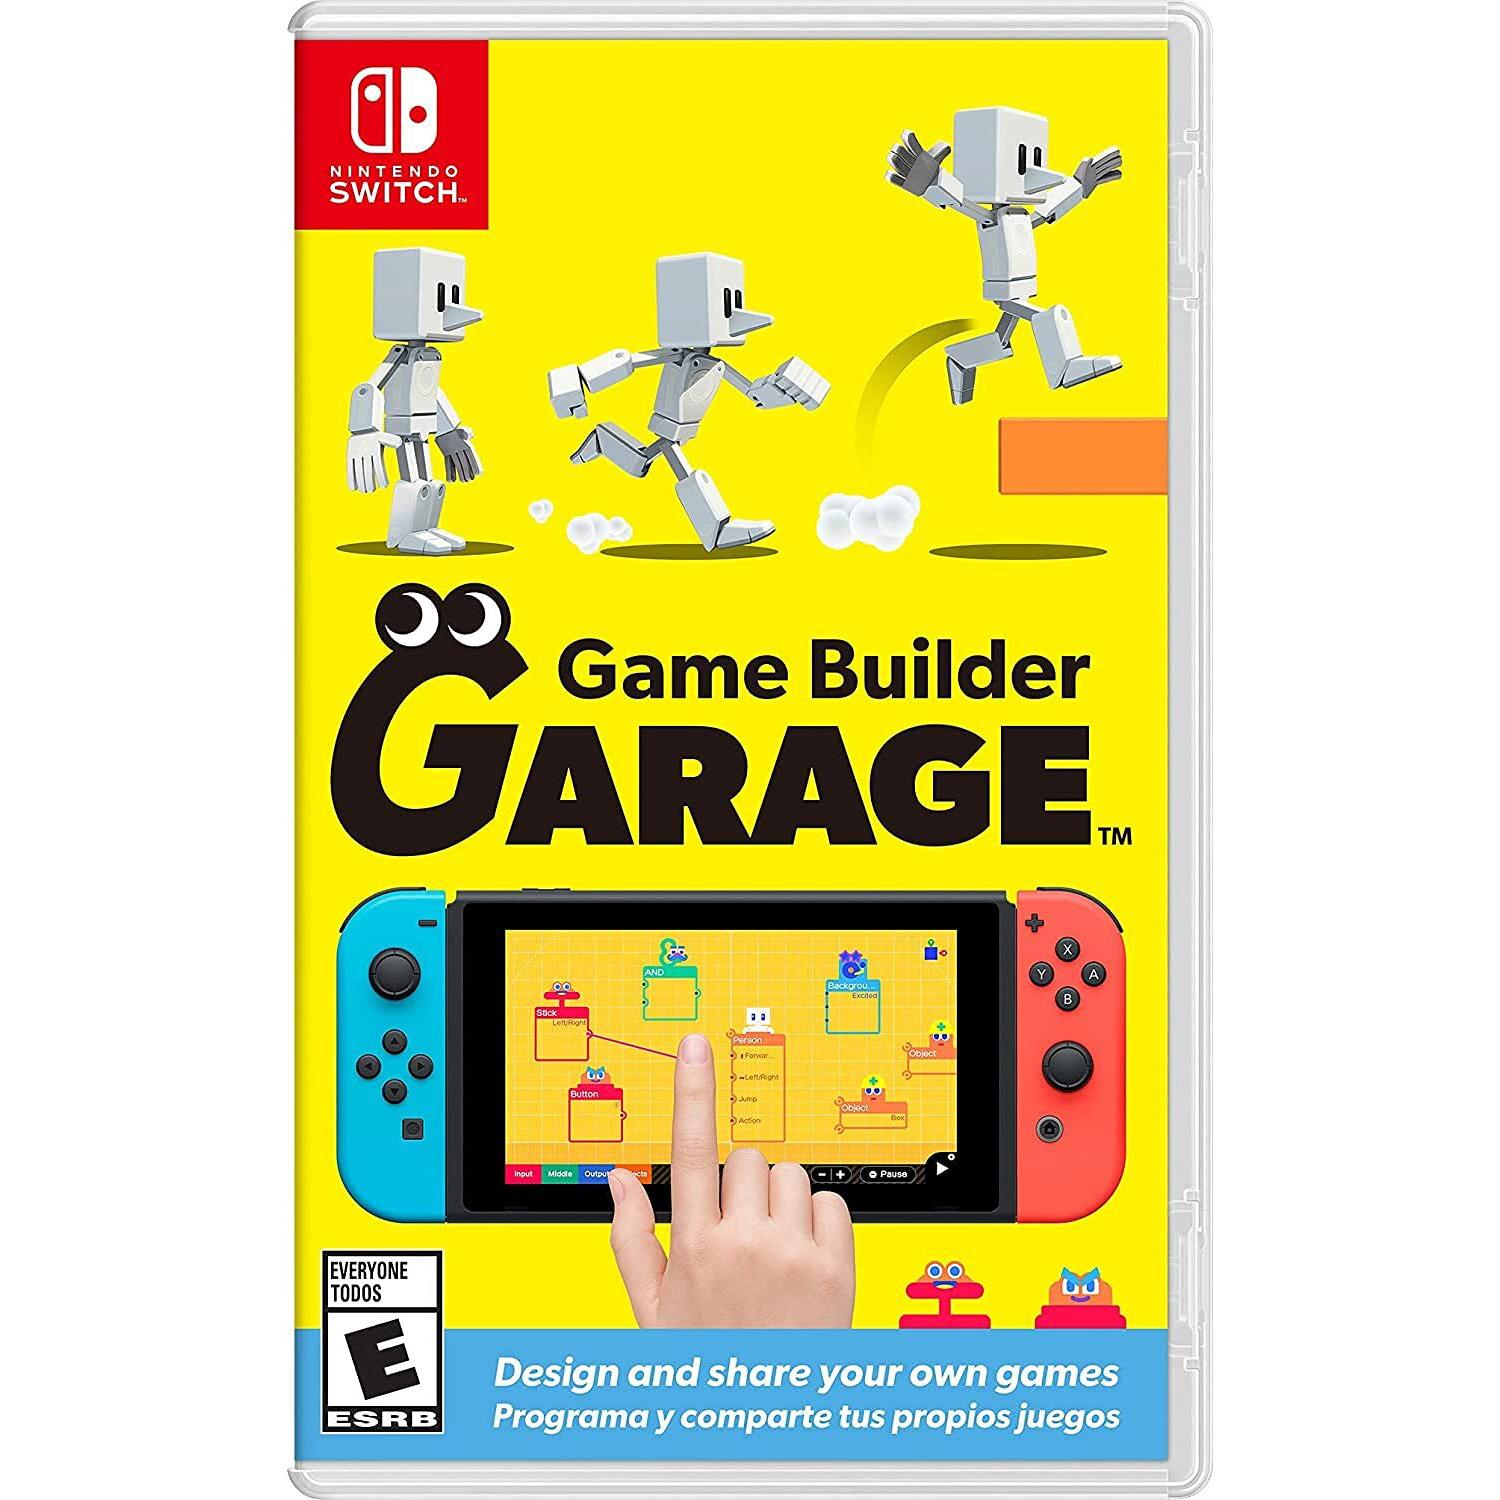 Game Builder Garage Nintendo Switch for $19.99